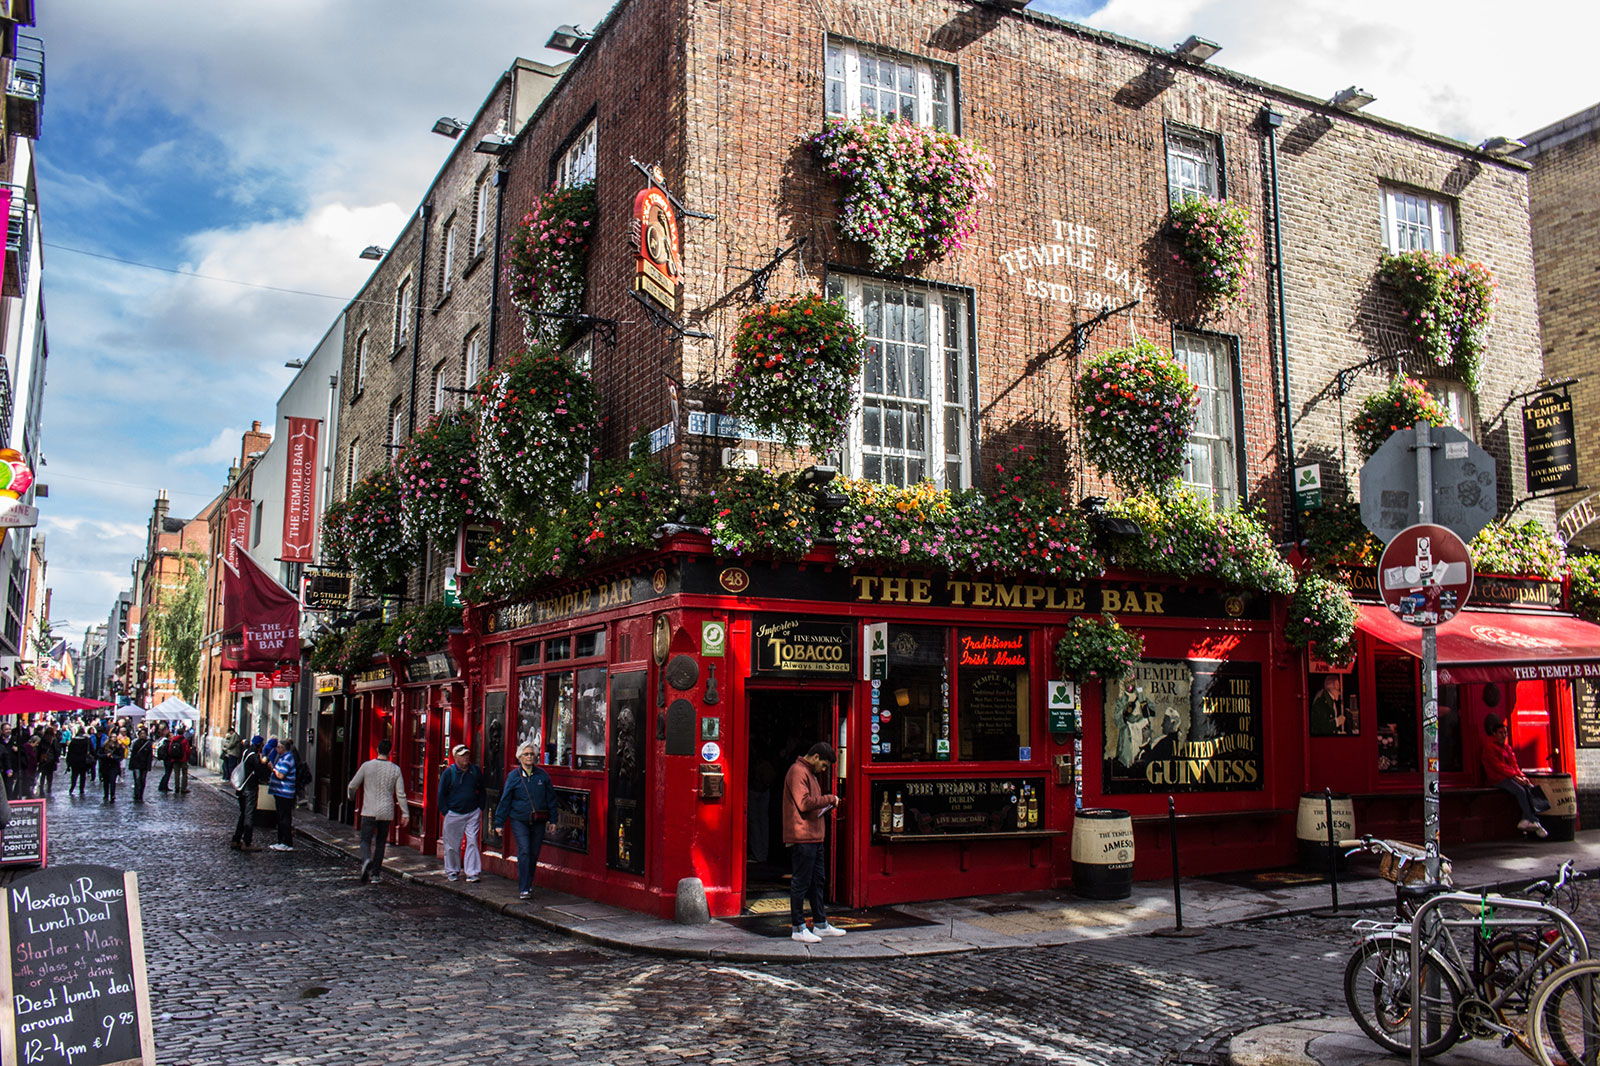 Dublin-Ireland